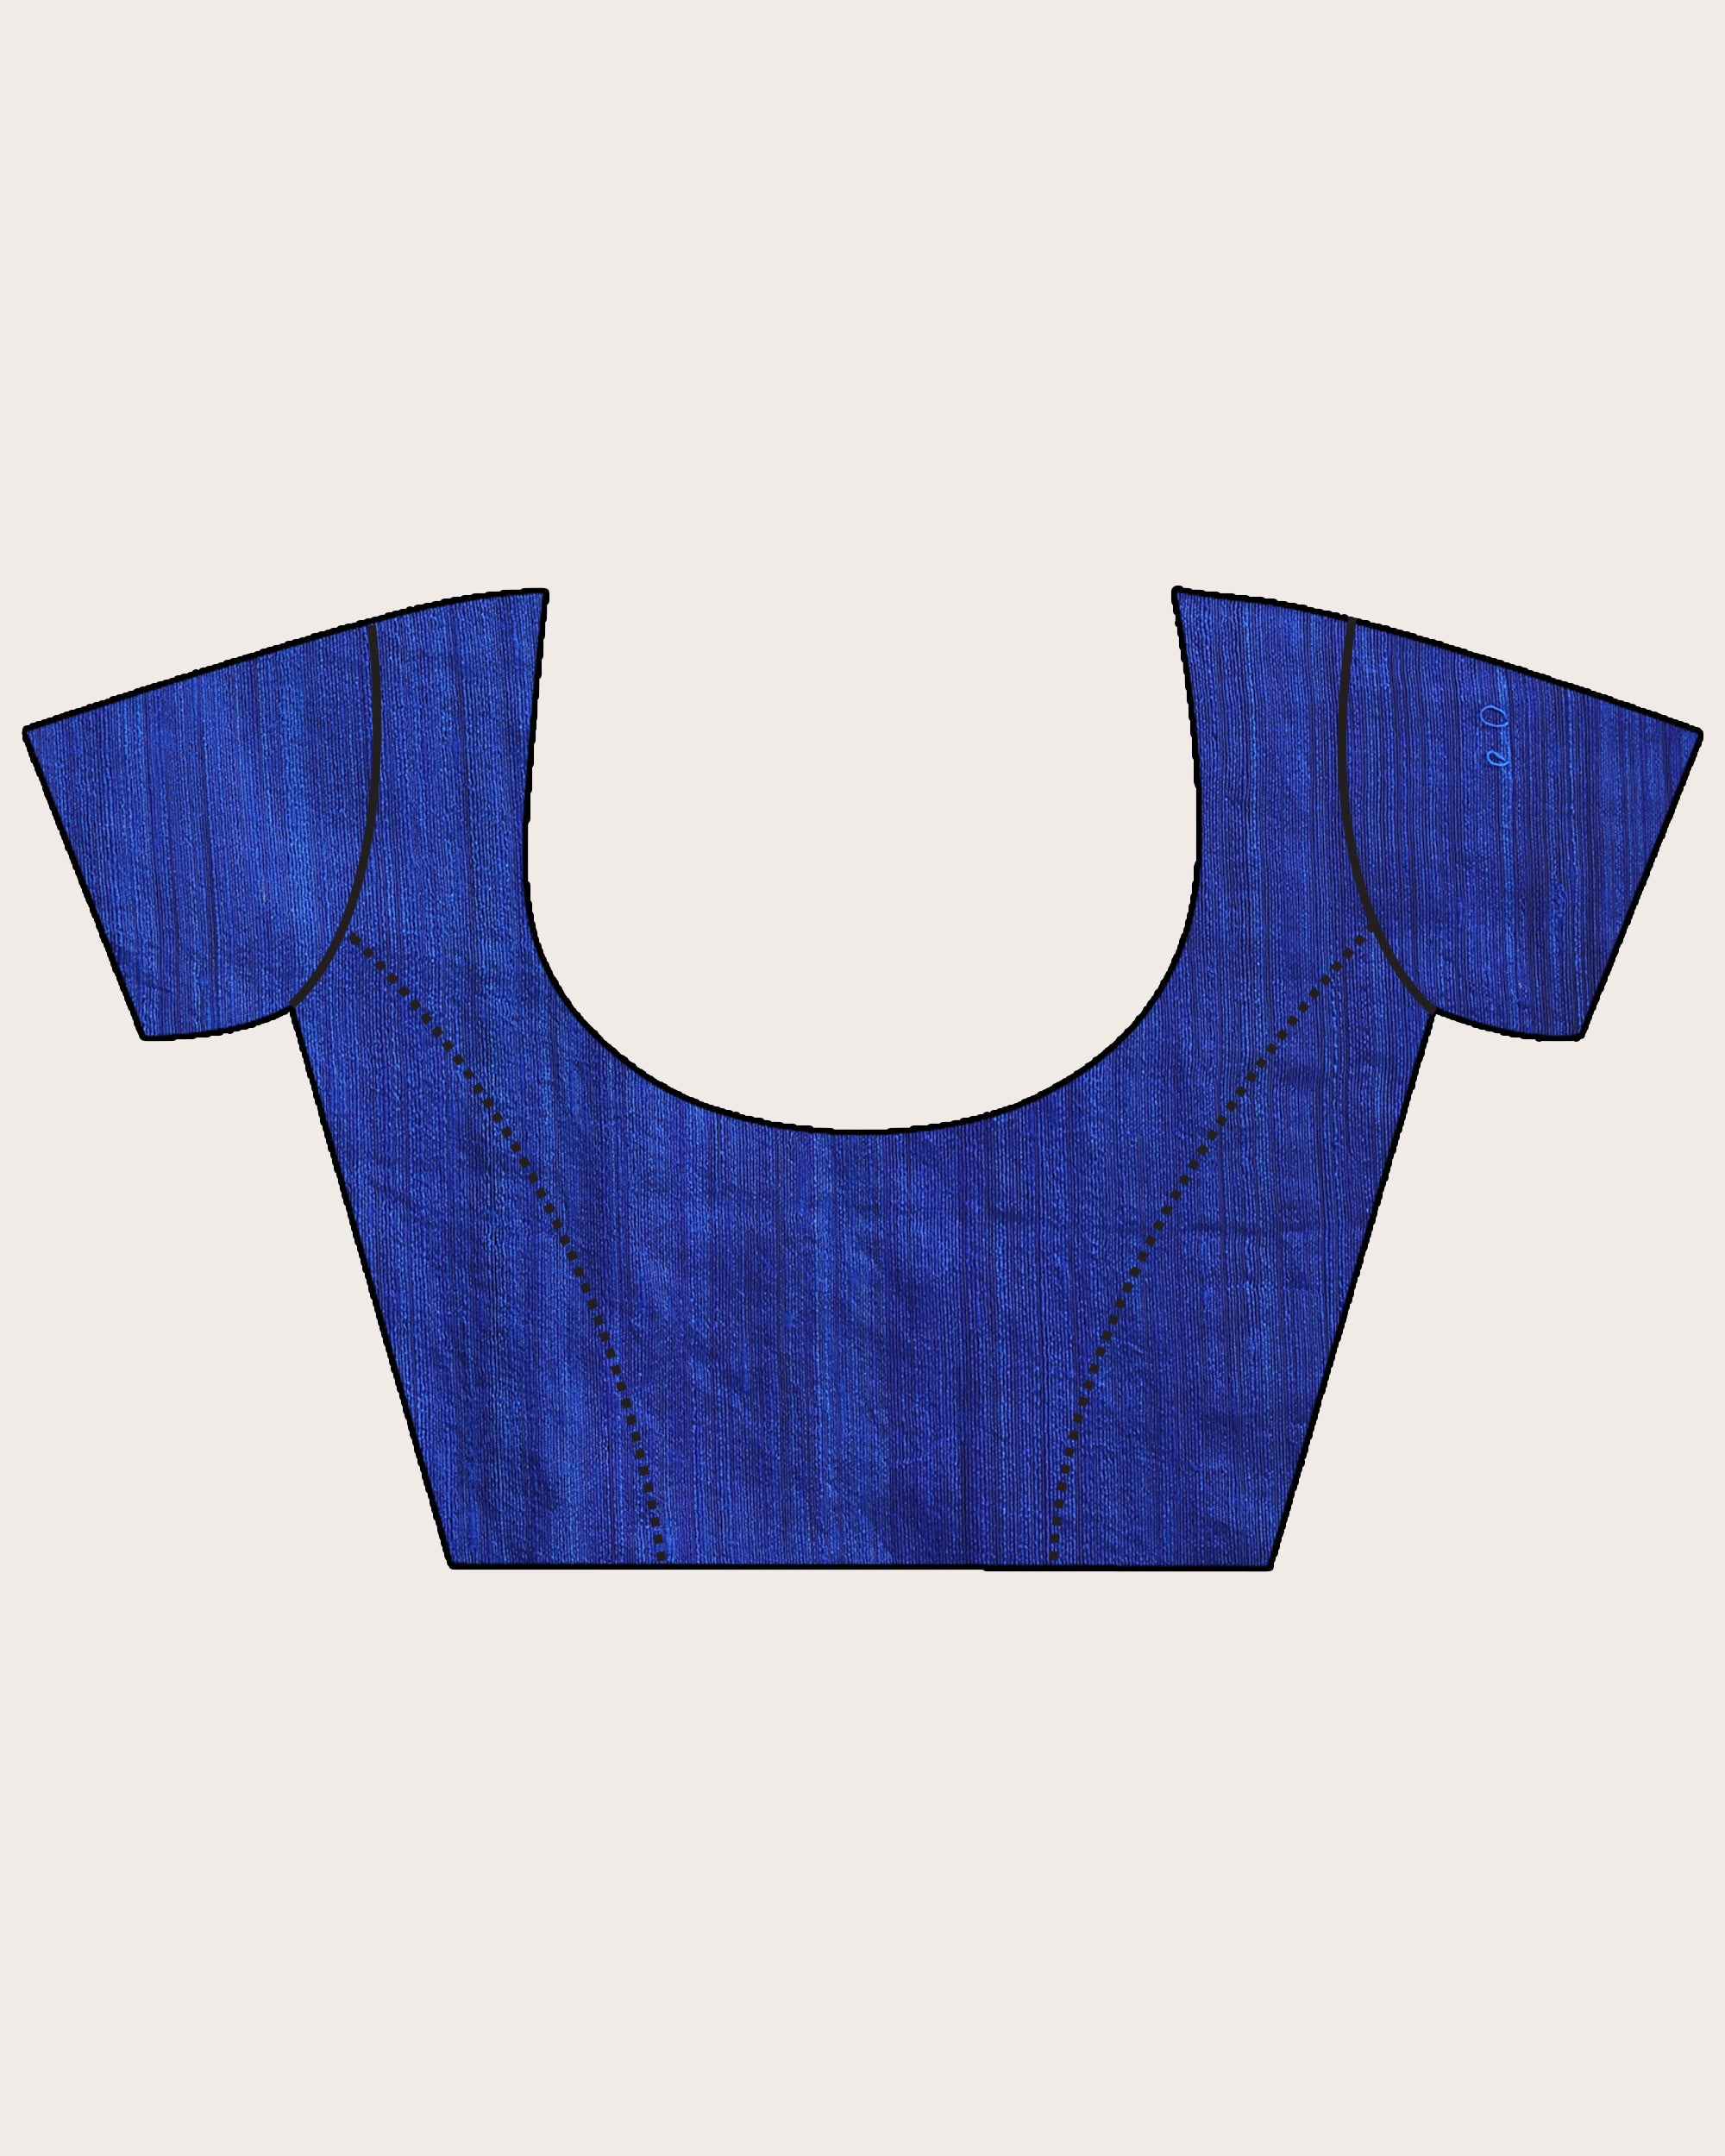 Women's Royel Blue Matka Silk Handloom Traditional Jamdani Saree - Angoshobha